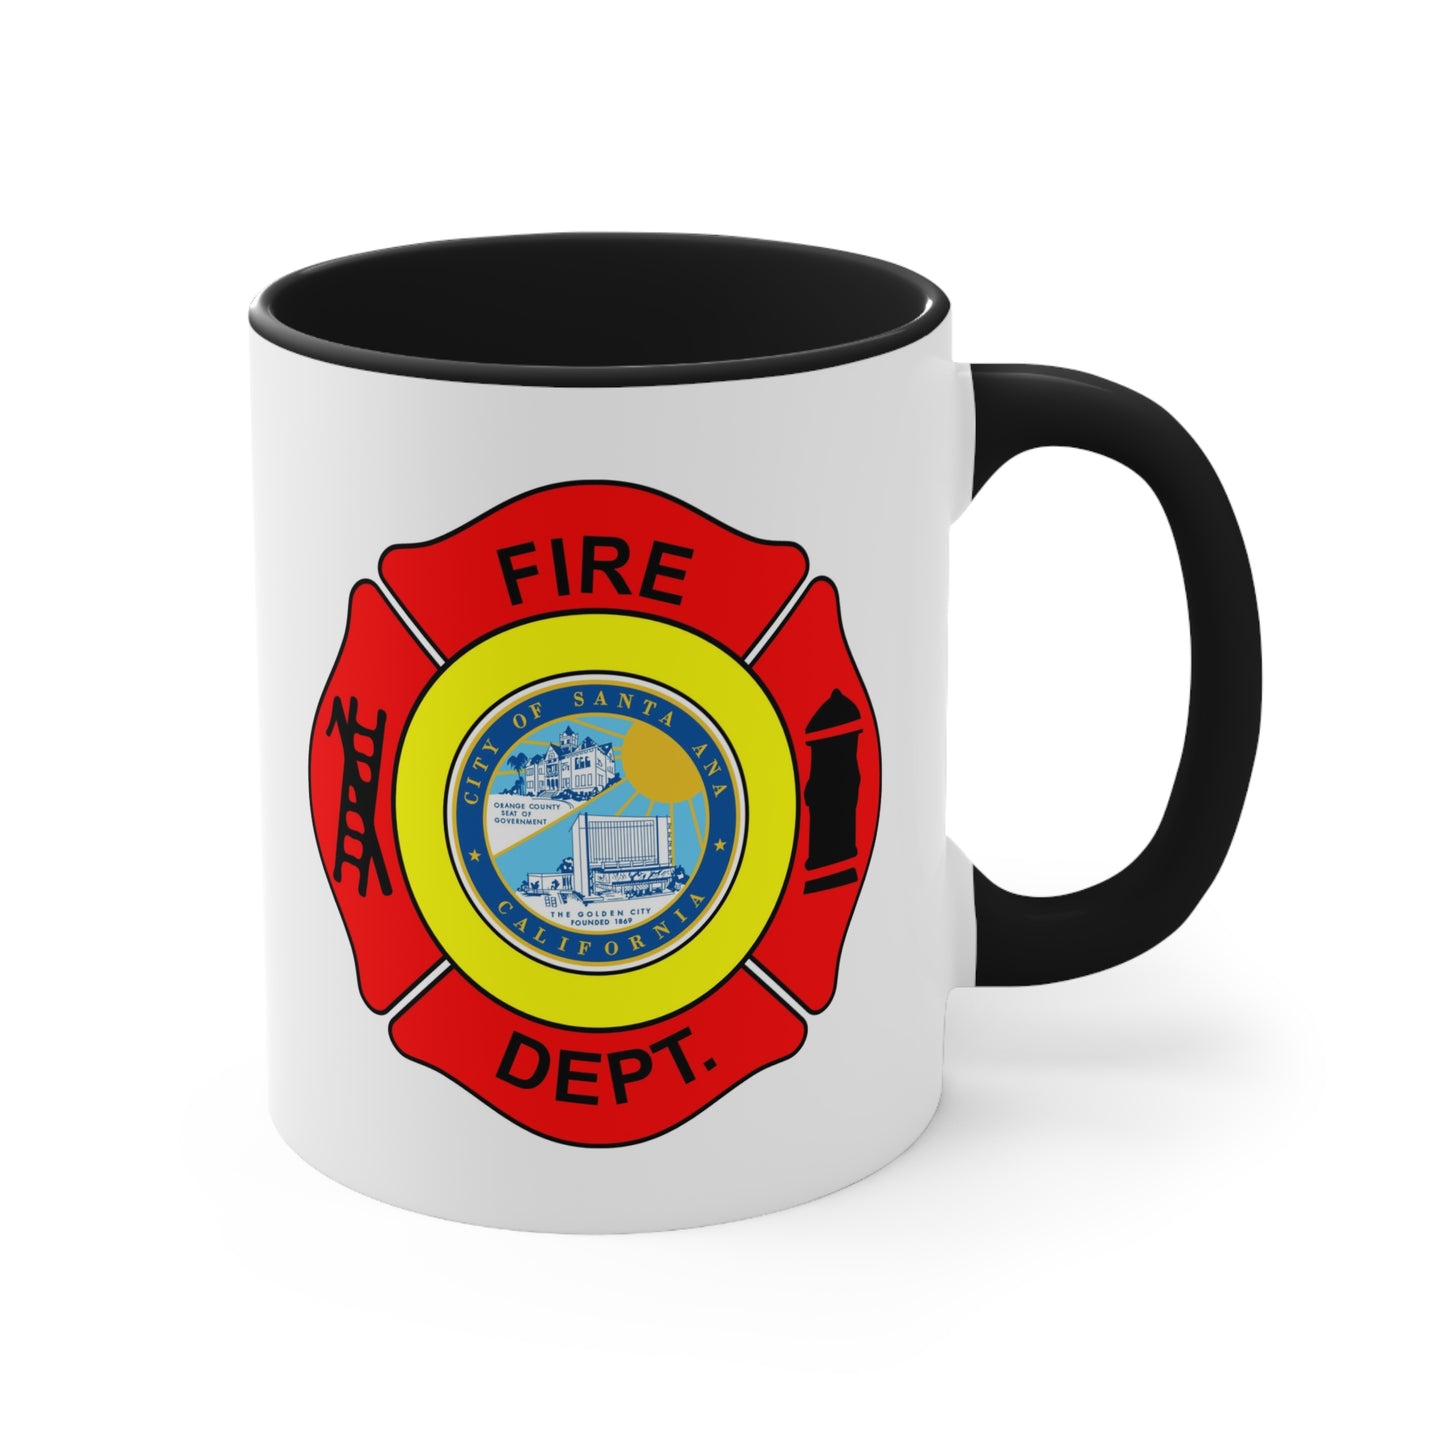 Santa Ana Fire Department Coffee Mug - Double Sided Black Accent White Ceramic 11oz by TheGlassyLass.com